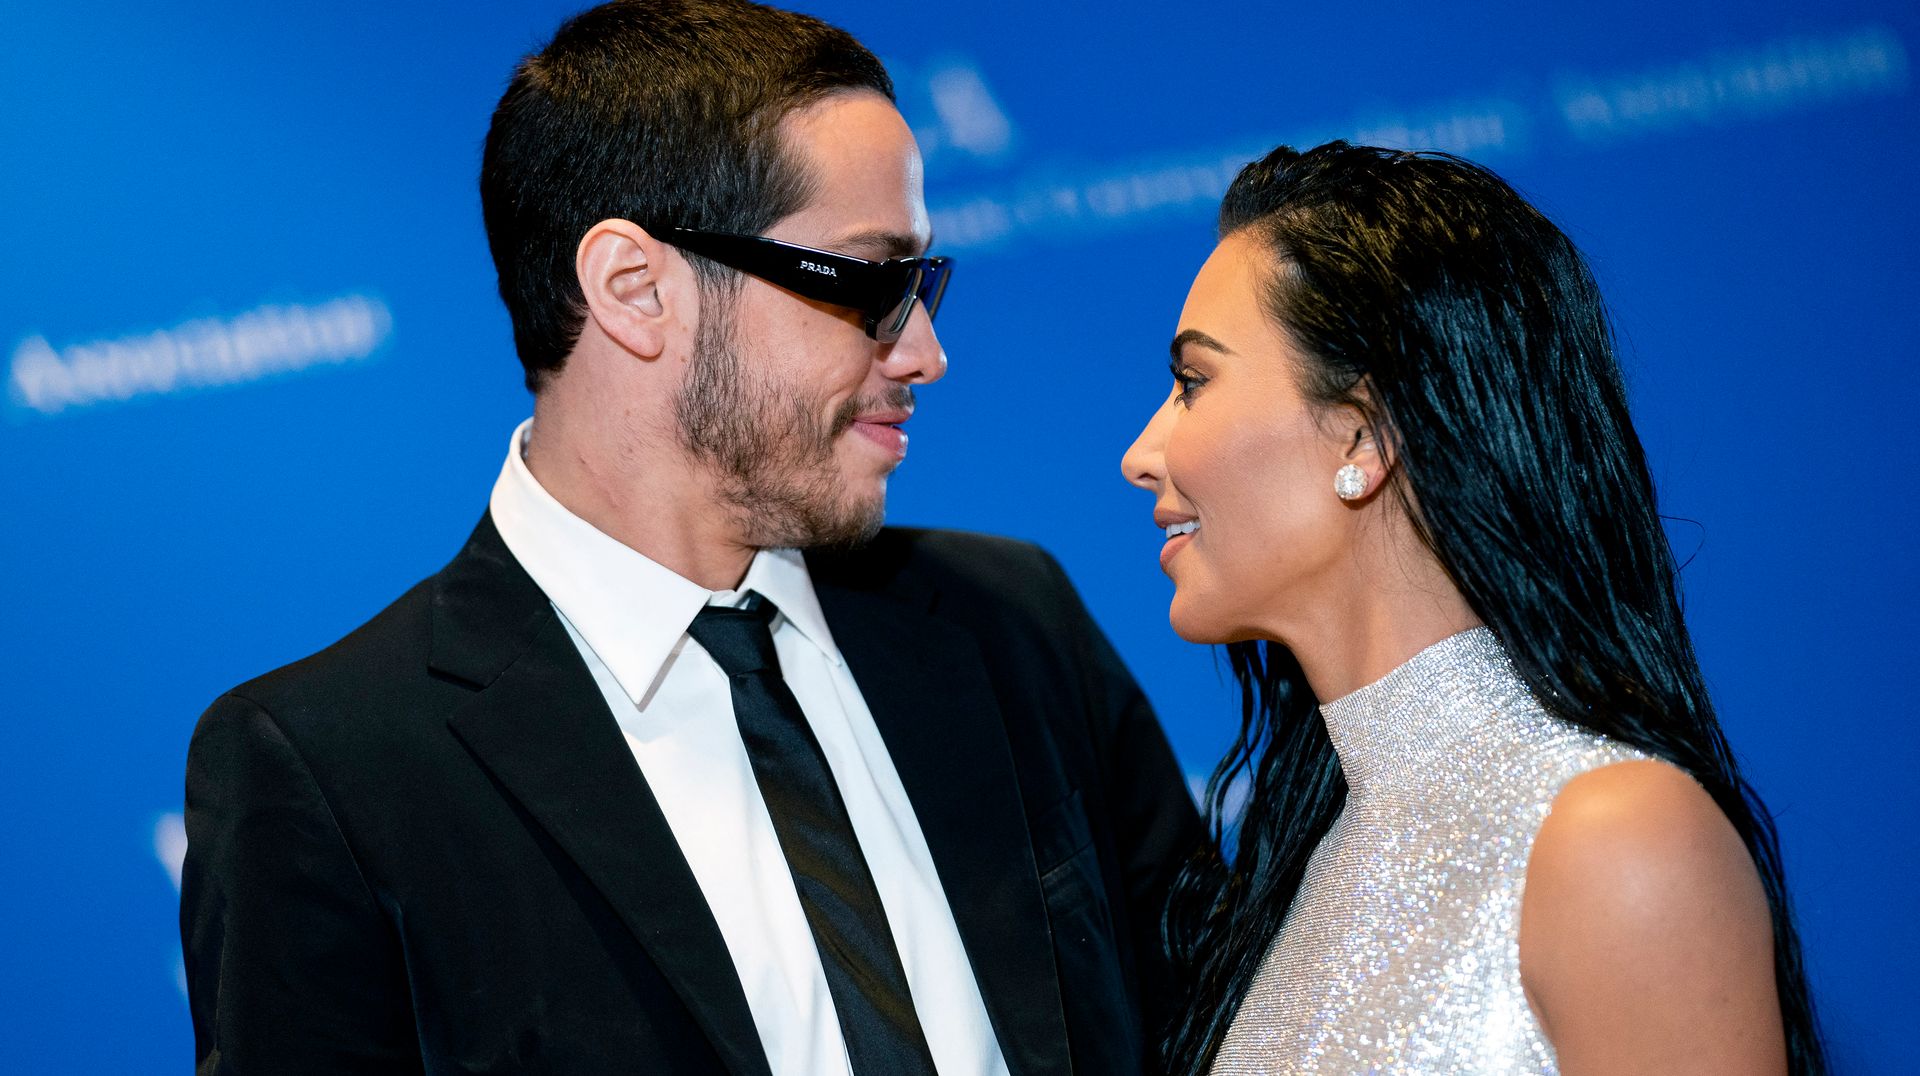 Kim Kardashian and Pete Davidsons breakup is analyzed on social media   Daily Mail Online